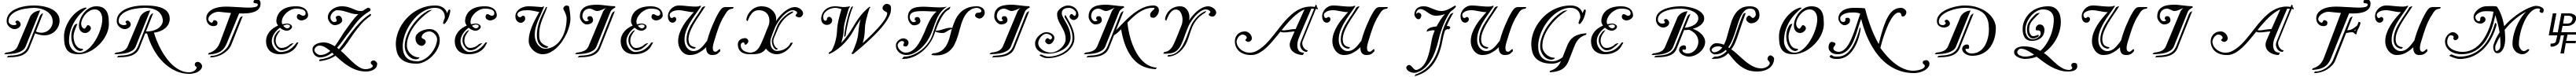 Пример написания шрифтом Caslon Calligraphic Initials текста на французском